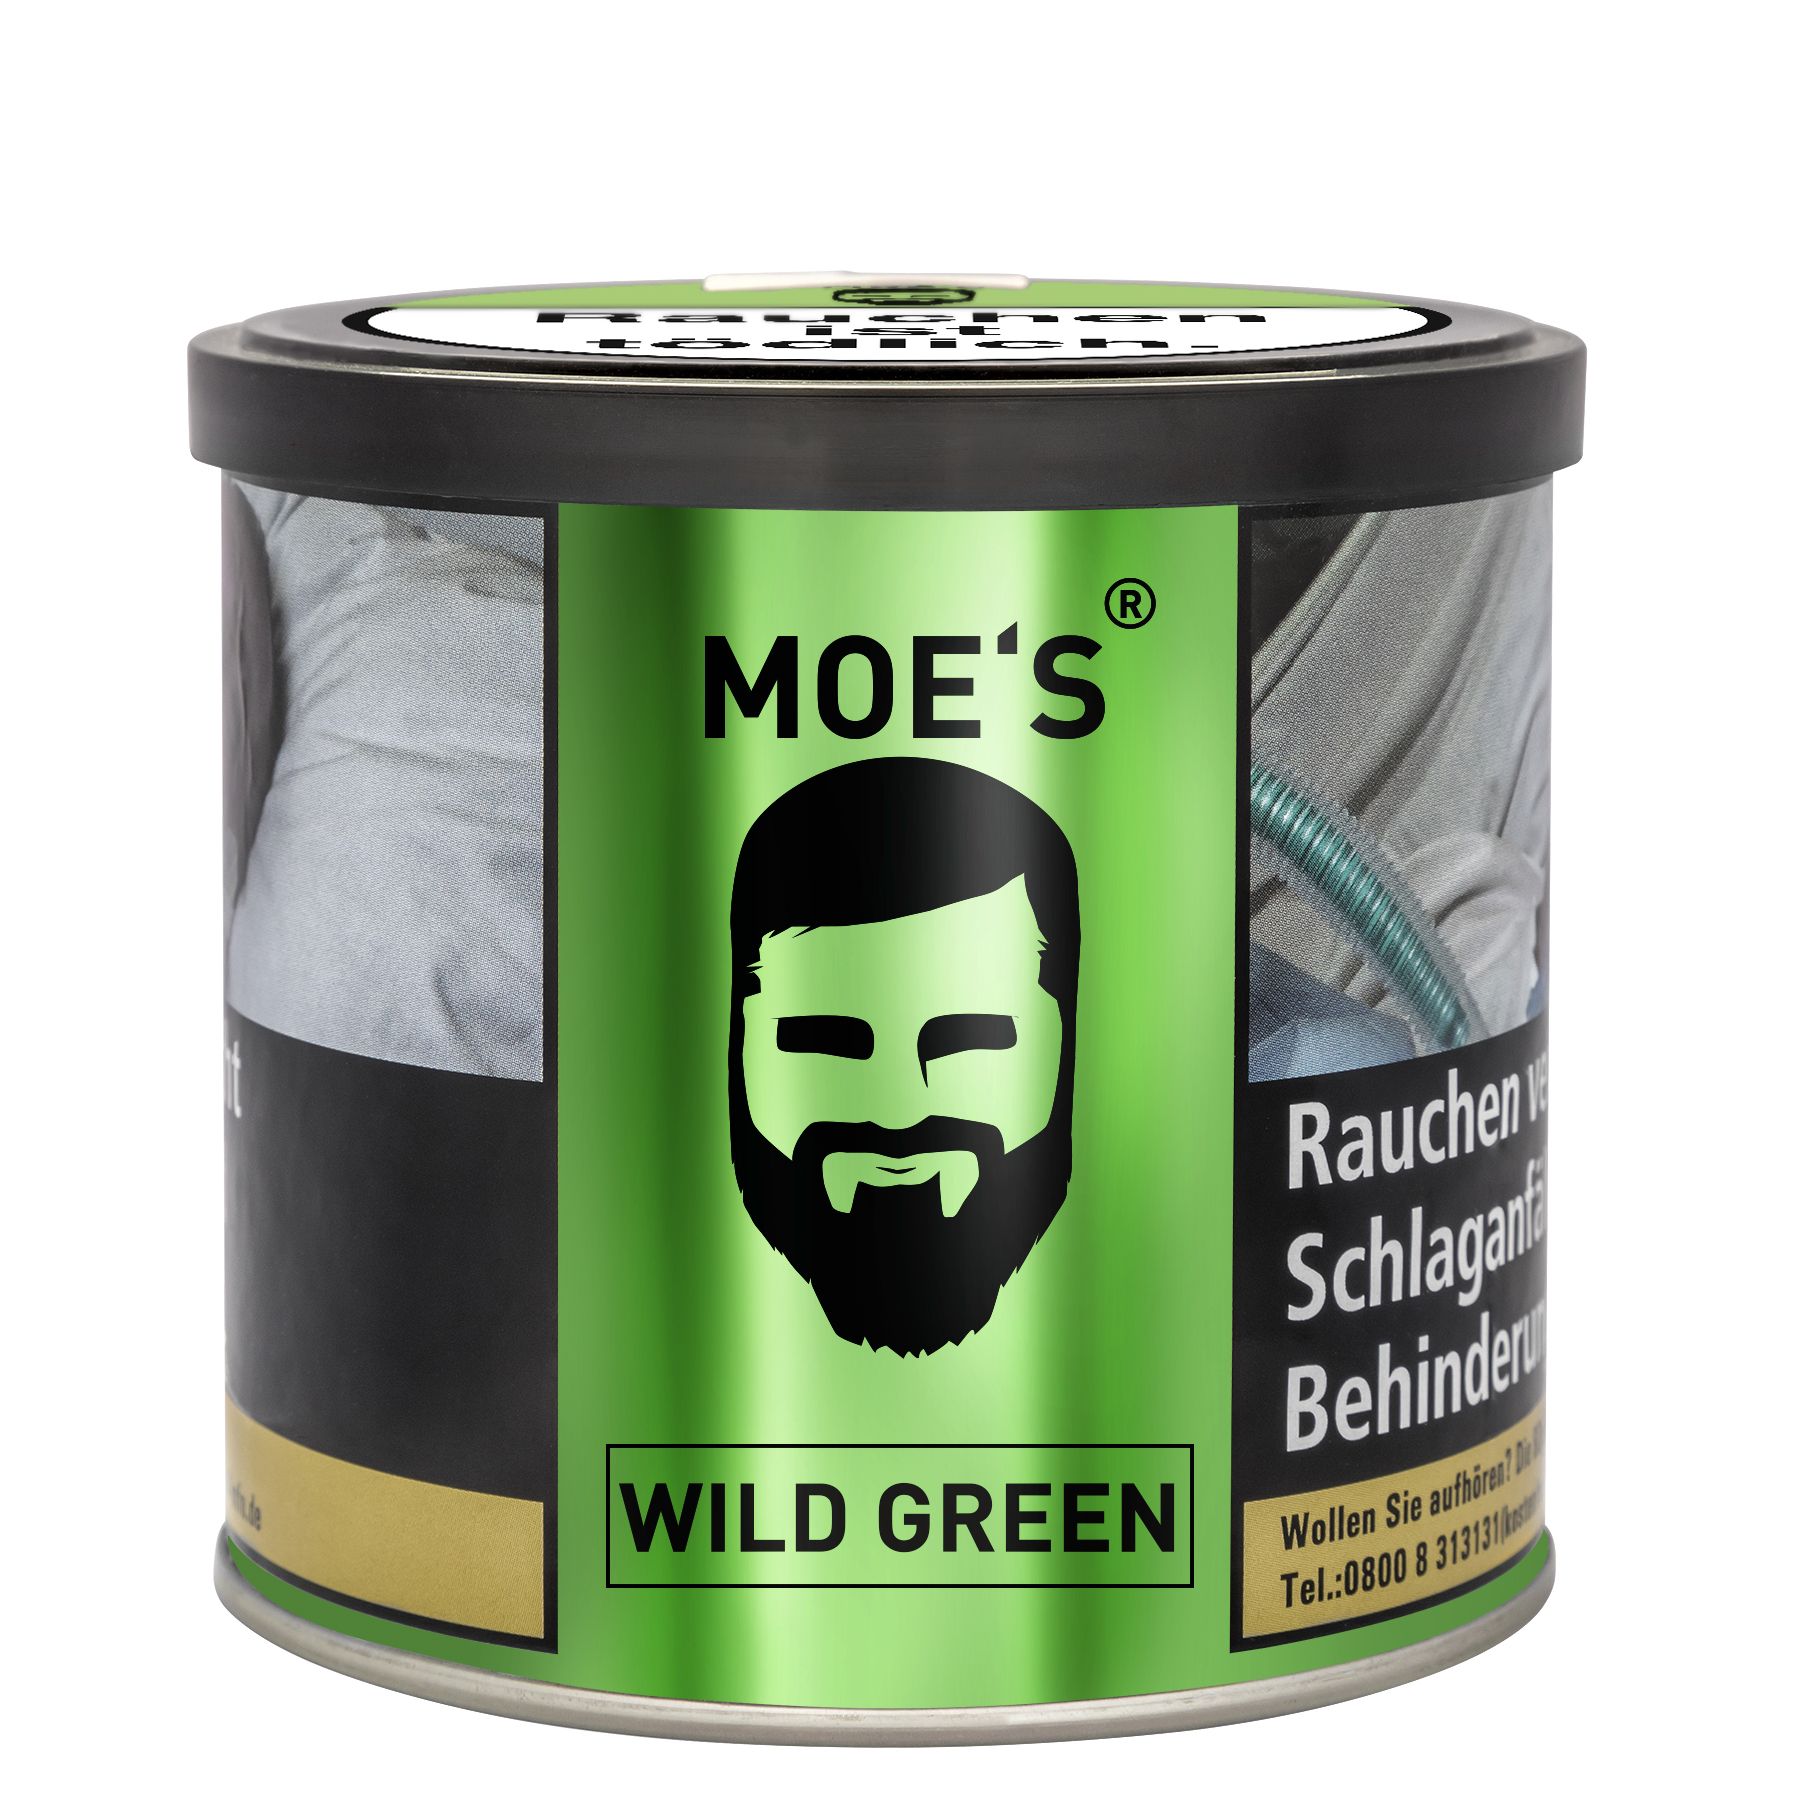 Moes Tobacco - Wild Green